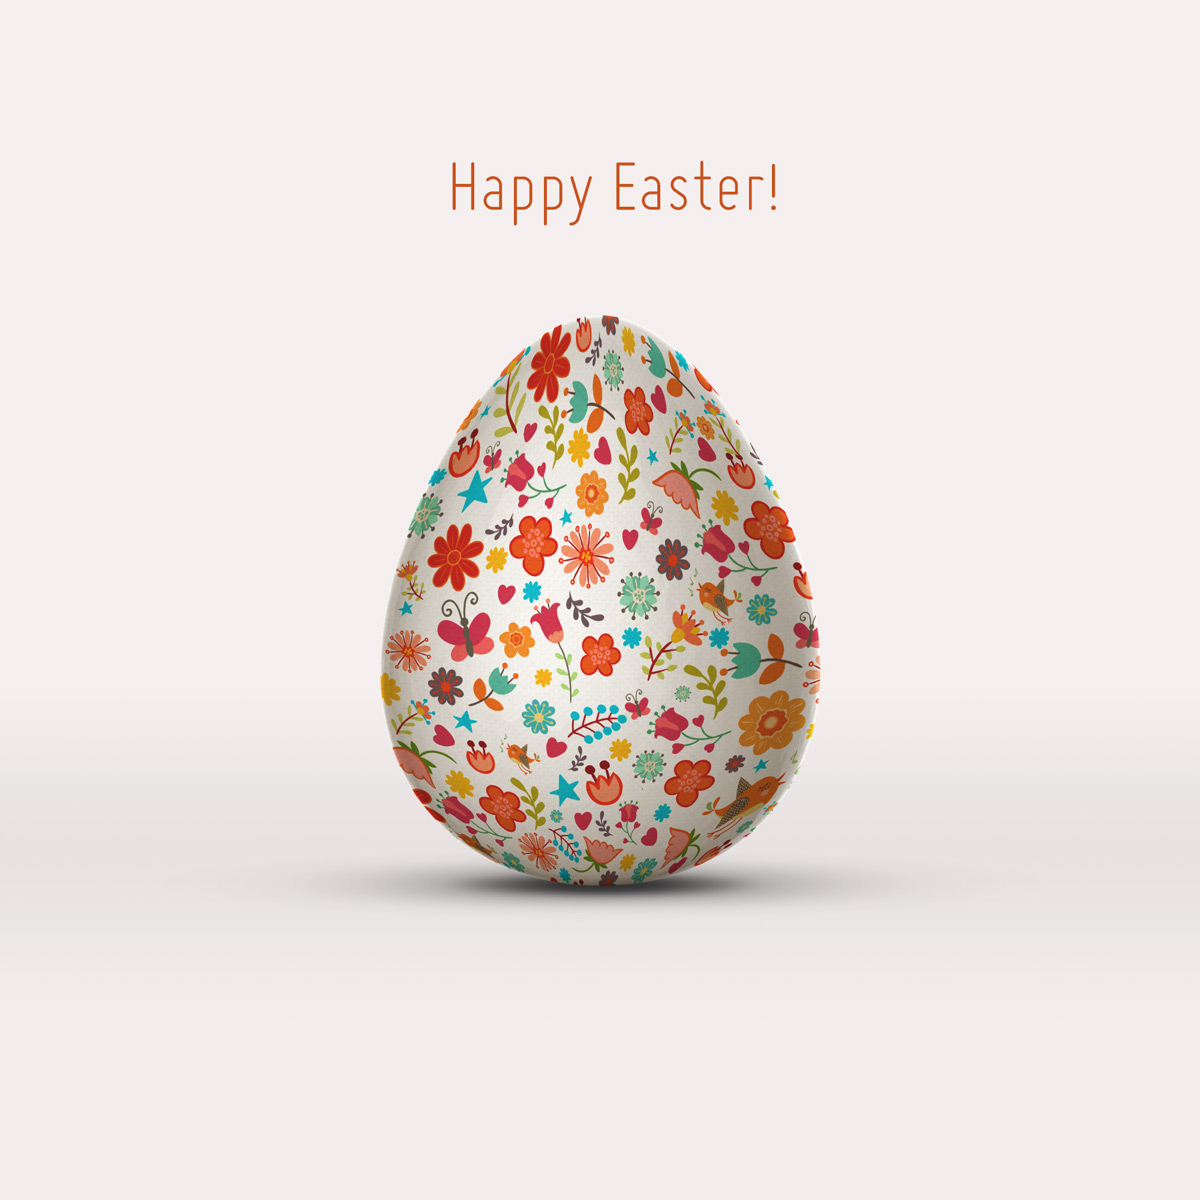 Download Free PSD Easter Egg Mockup - Photoshop psd